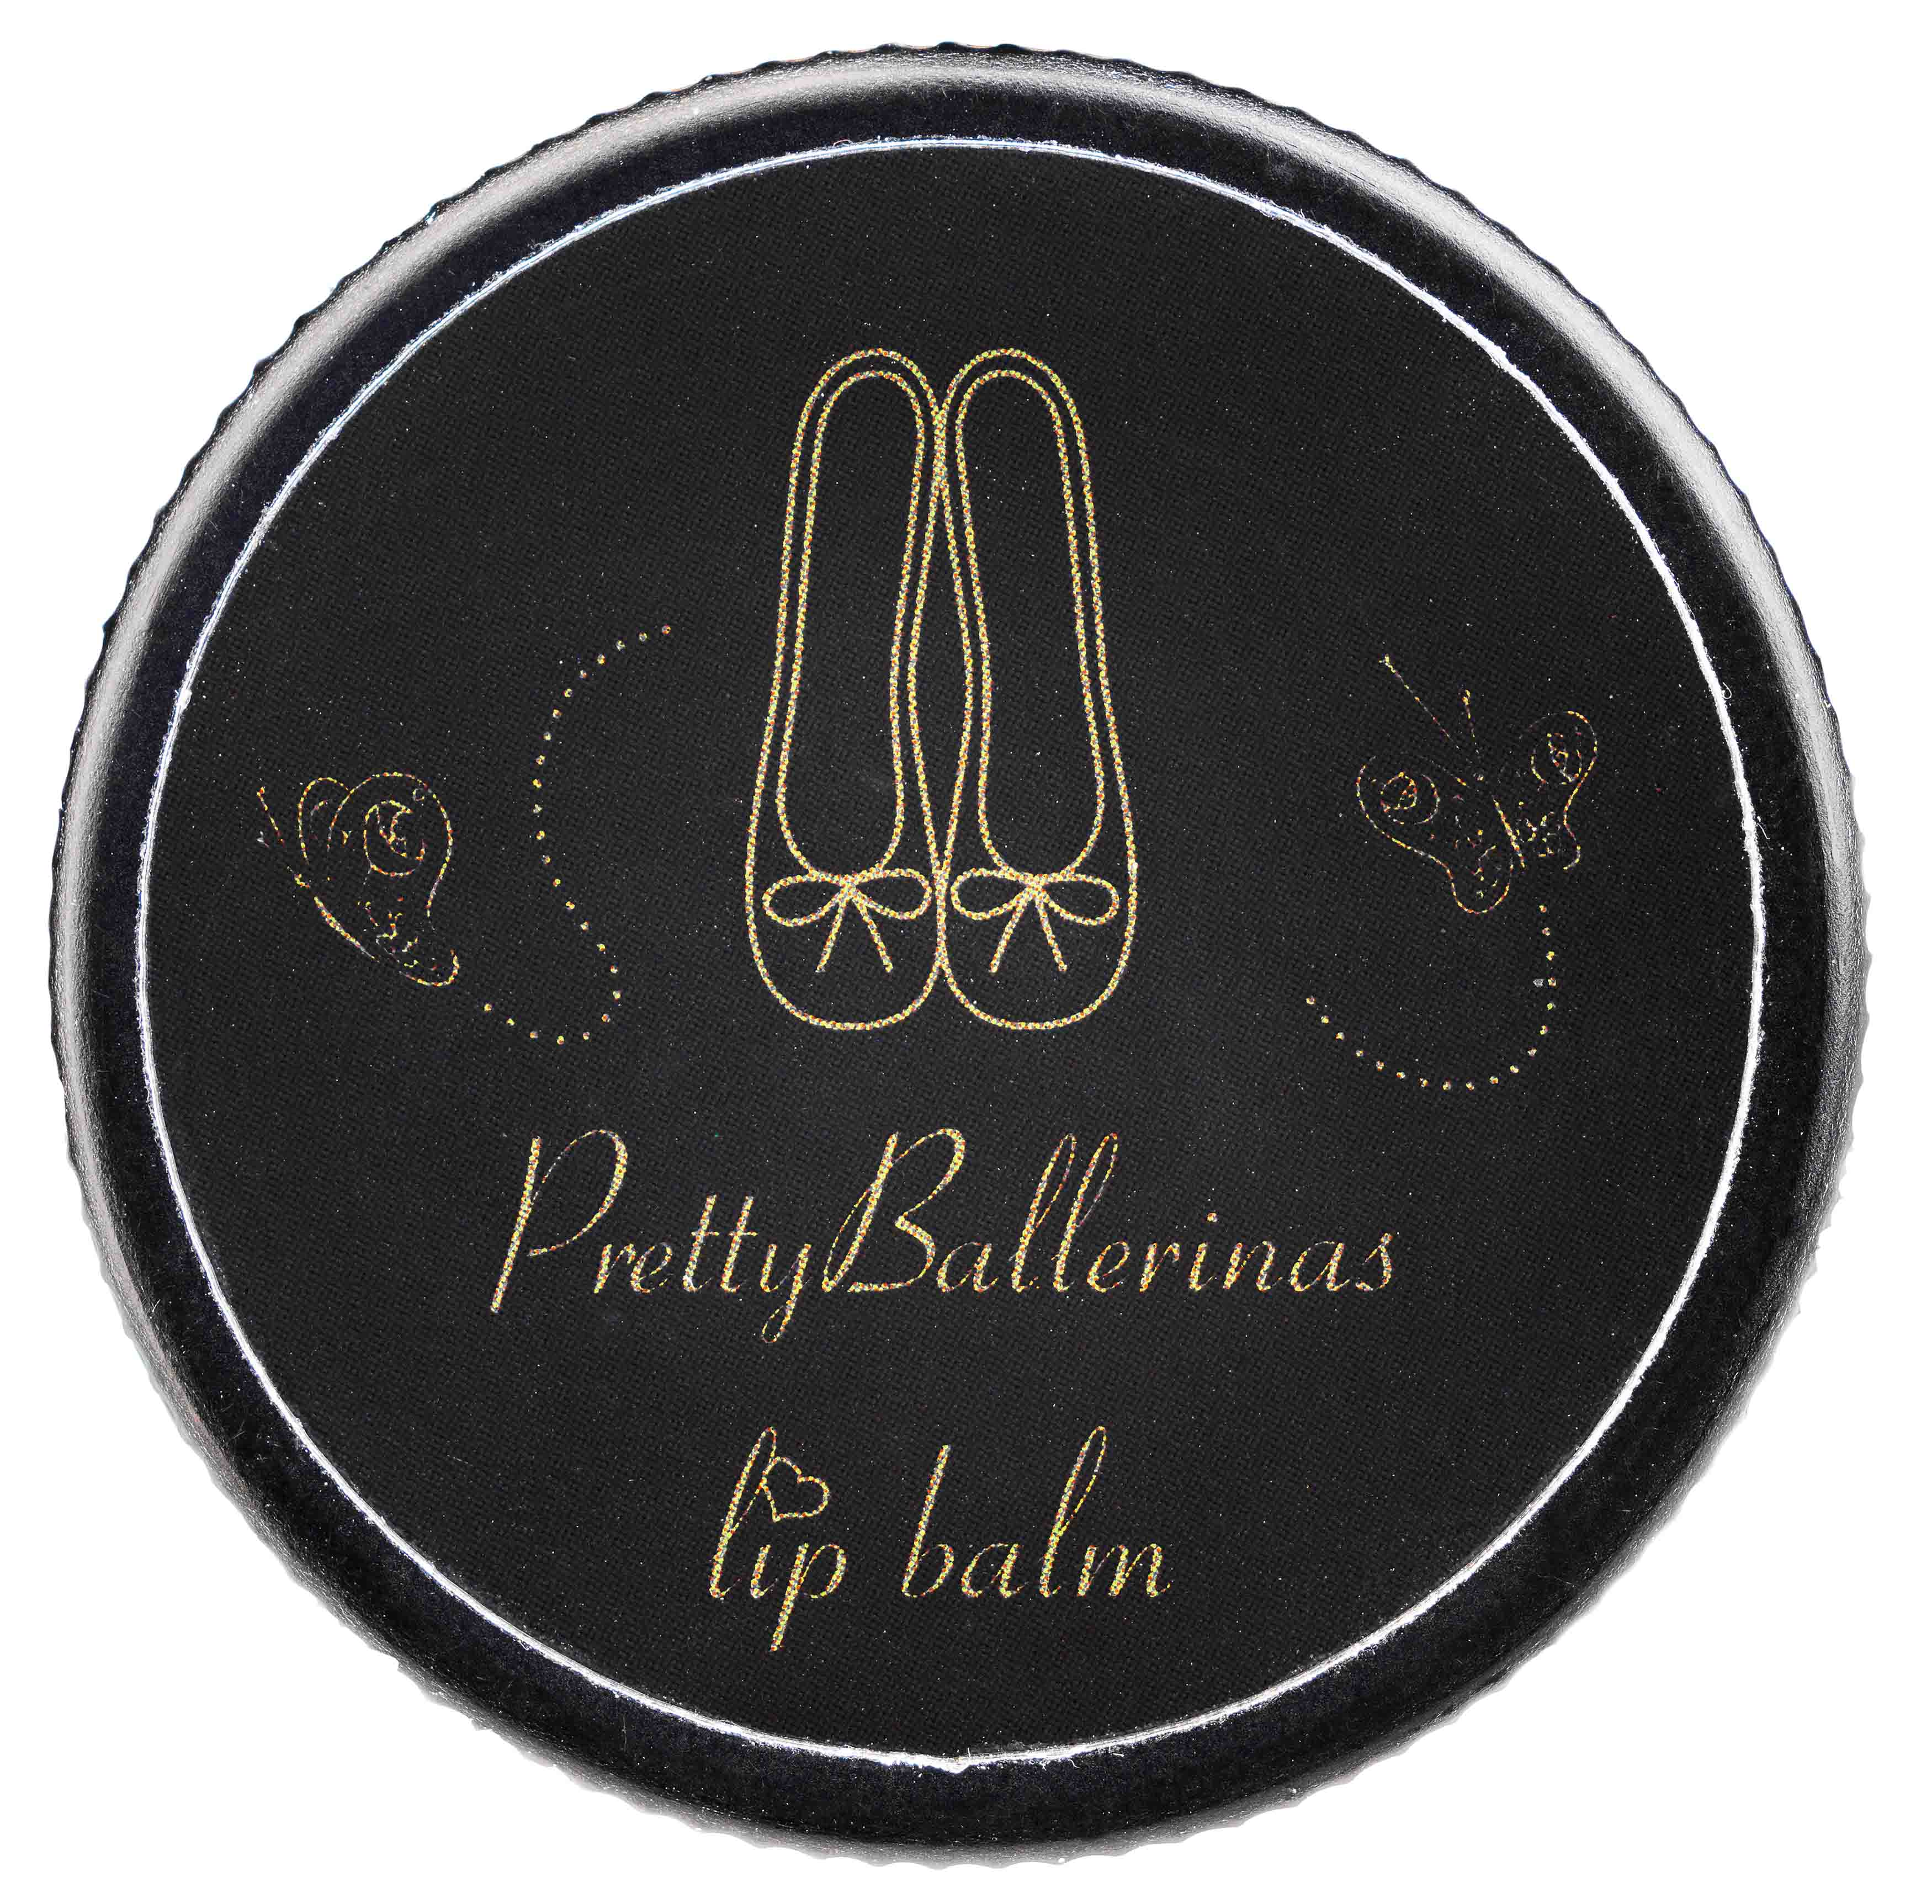 Pretty Ballerinas lip balm